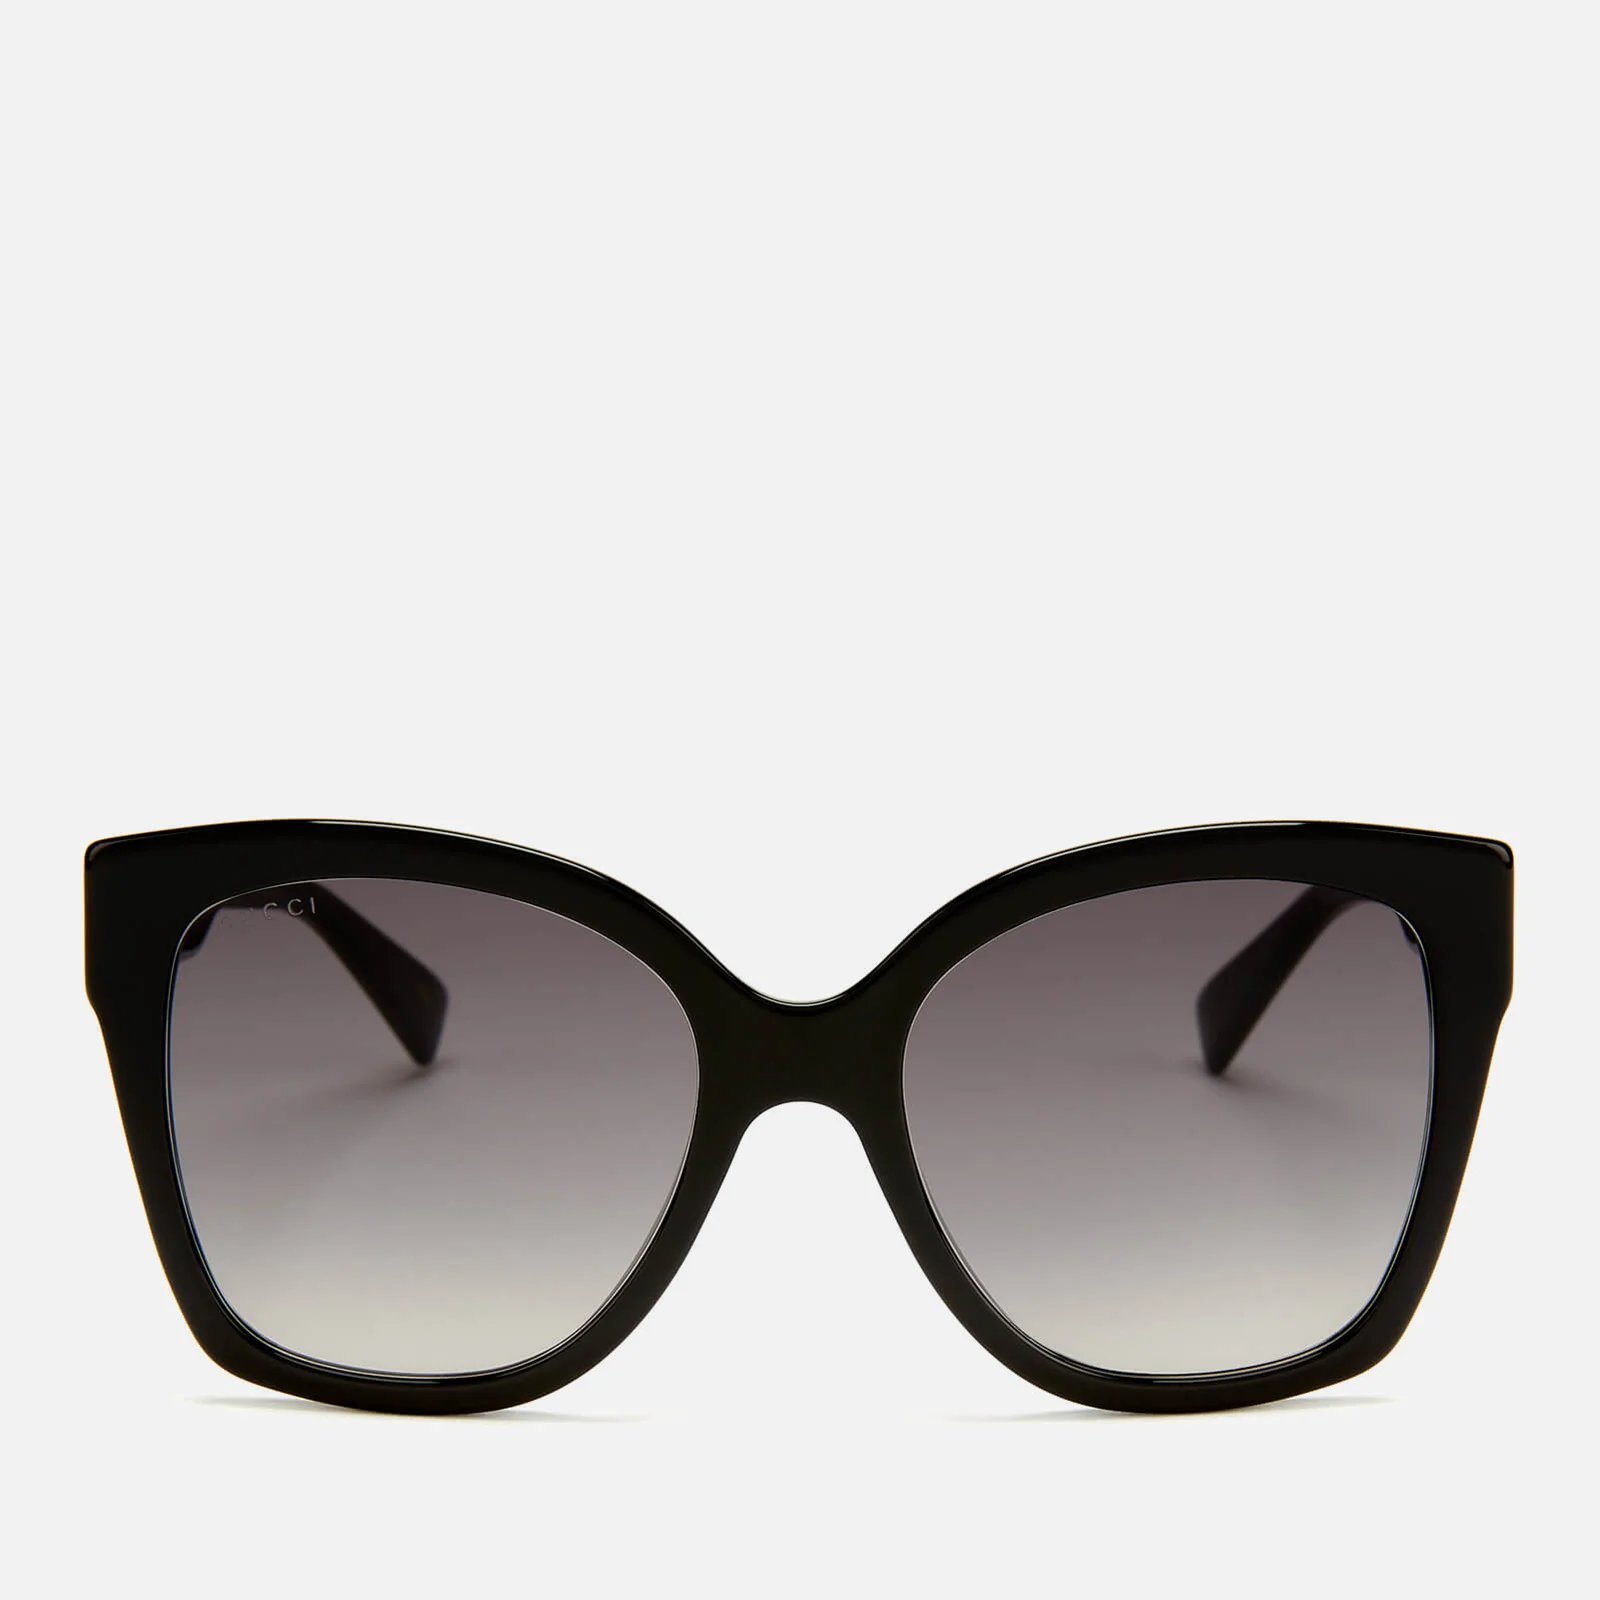 Gucci Women's Large Square Frame Sunglasses - Black/Gold Image 1